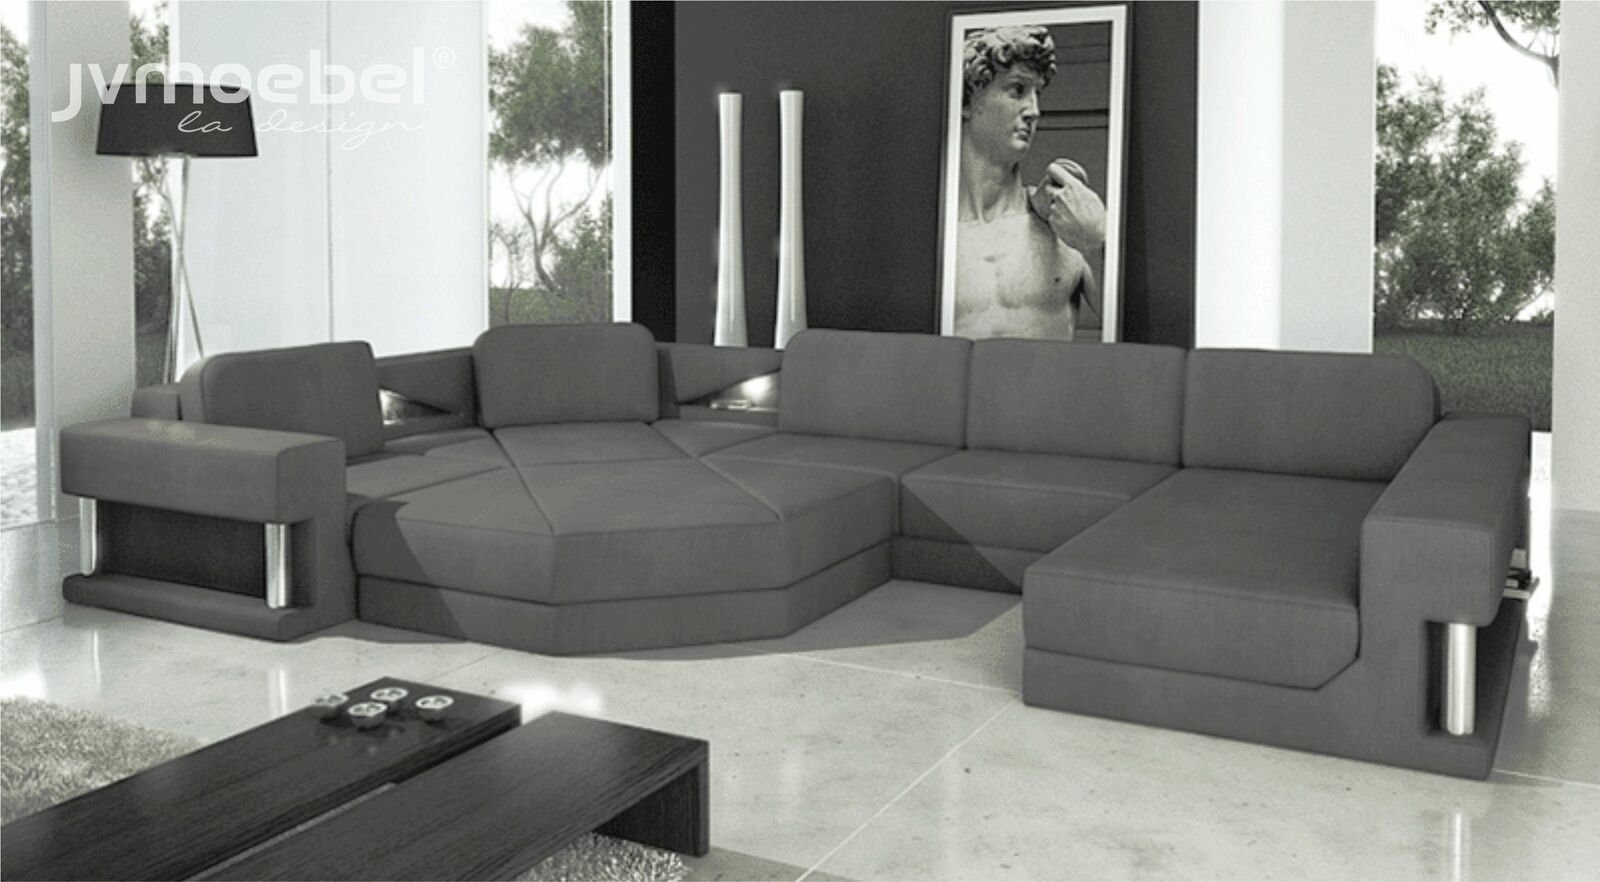 JVmoebel Ecksofa, Design Couch Polster Textil Modern Schlaf Bettfunktion Ecksofa U-Form